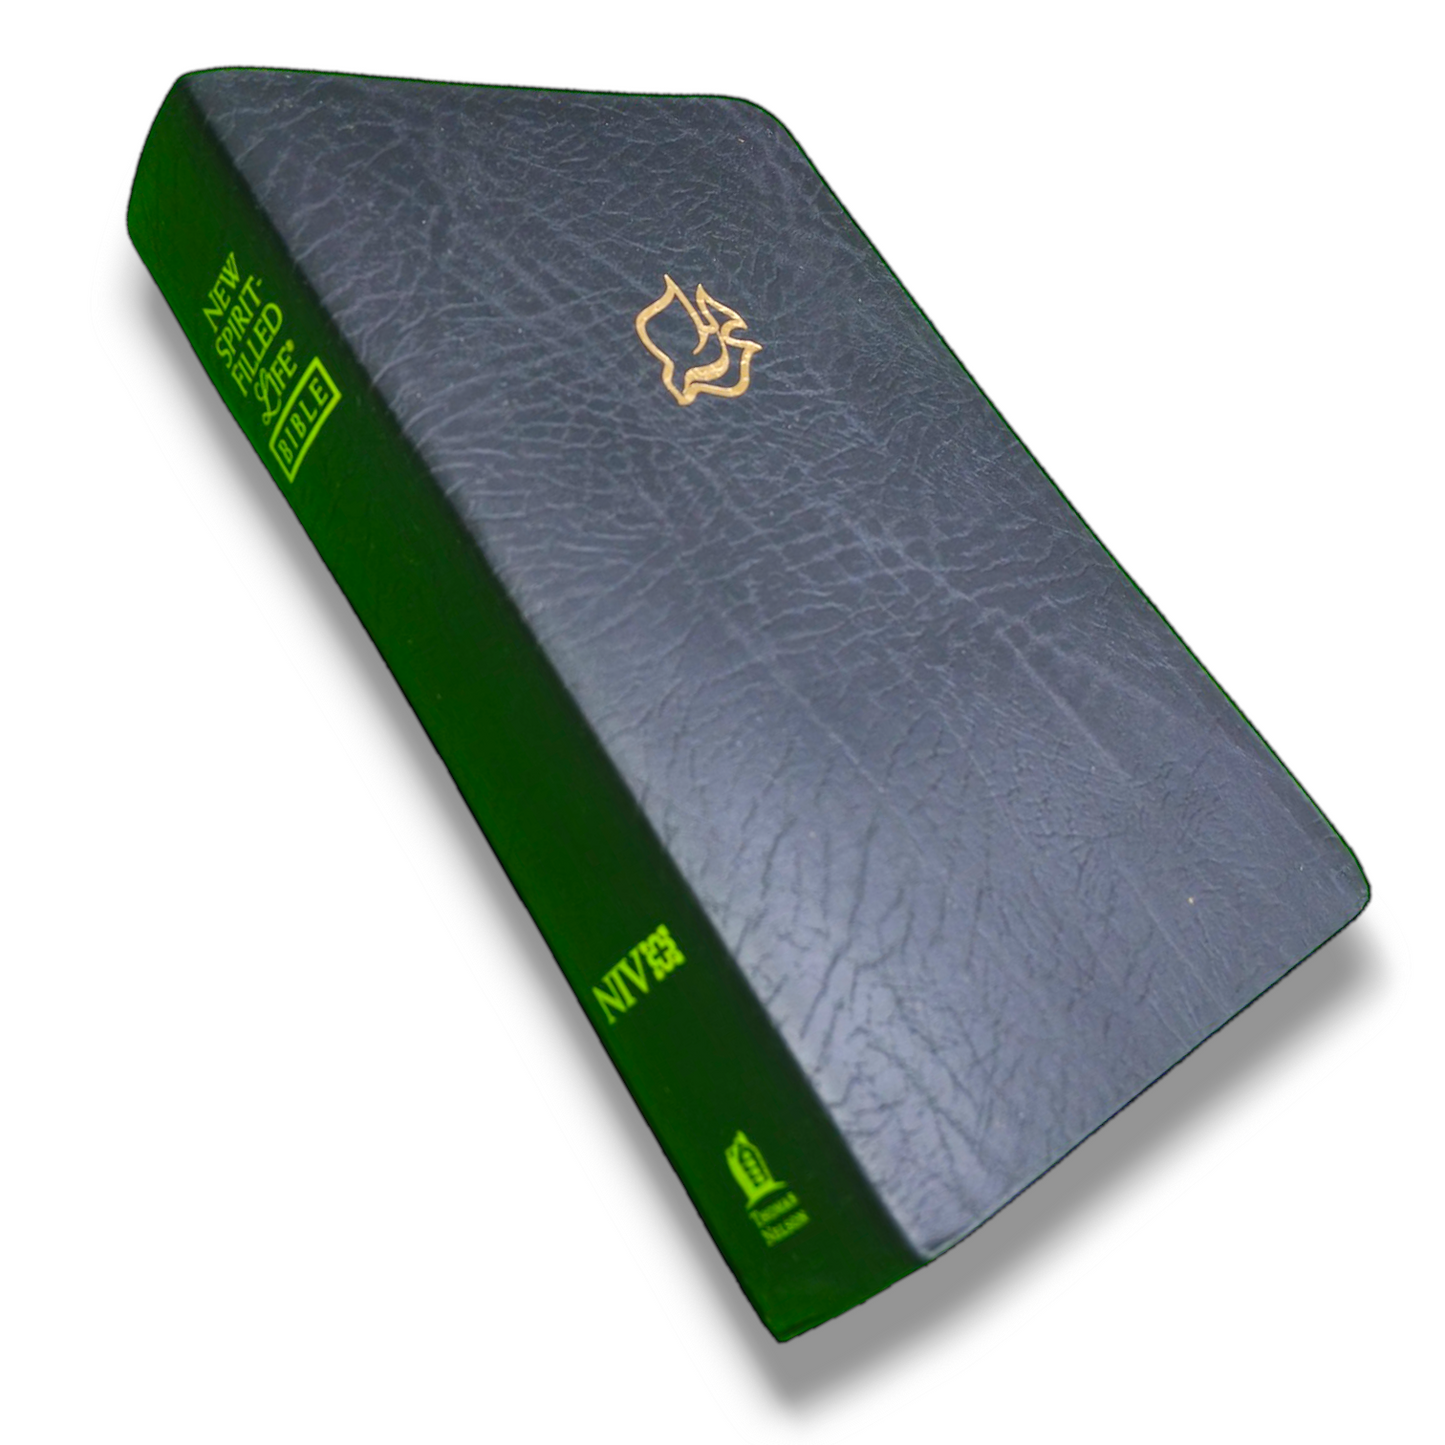 New Spirit Filled Life Bible | NIV Version | New Edition | Black Tan Soft Imitation Leather